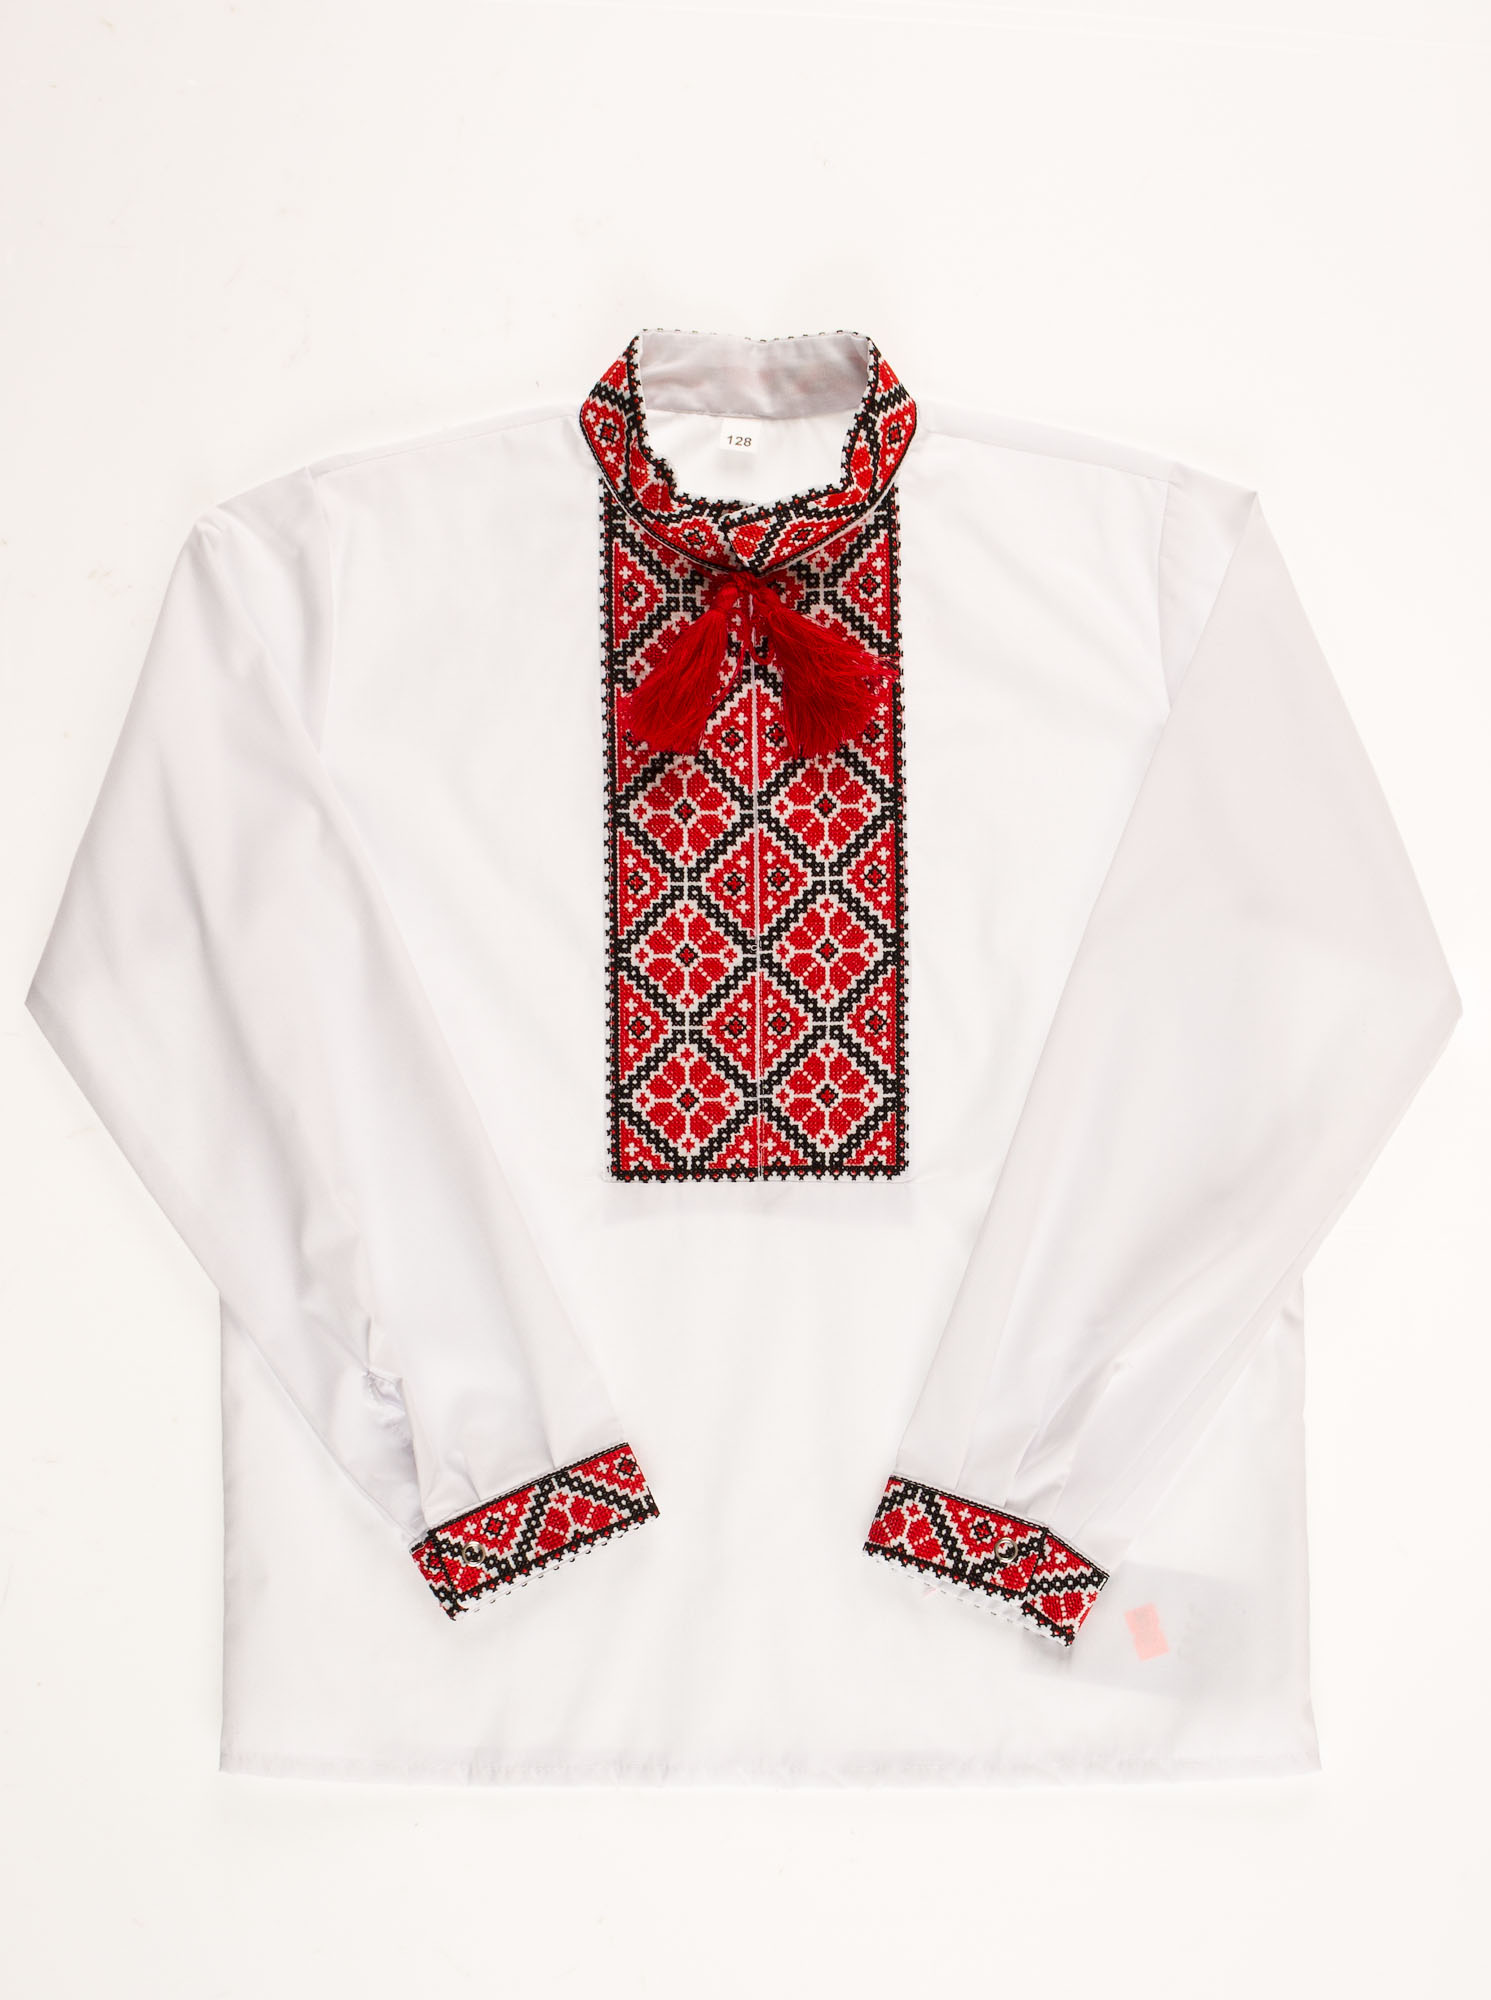 Вышиванка-сорочка для мальчика Украина Тарасик красная 2369 - ціна